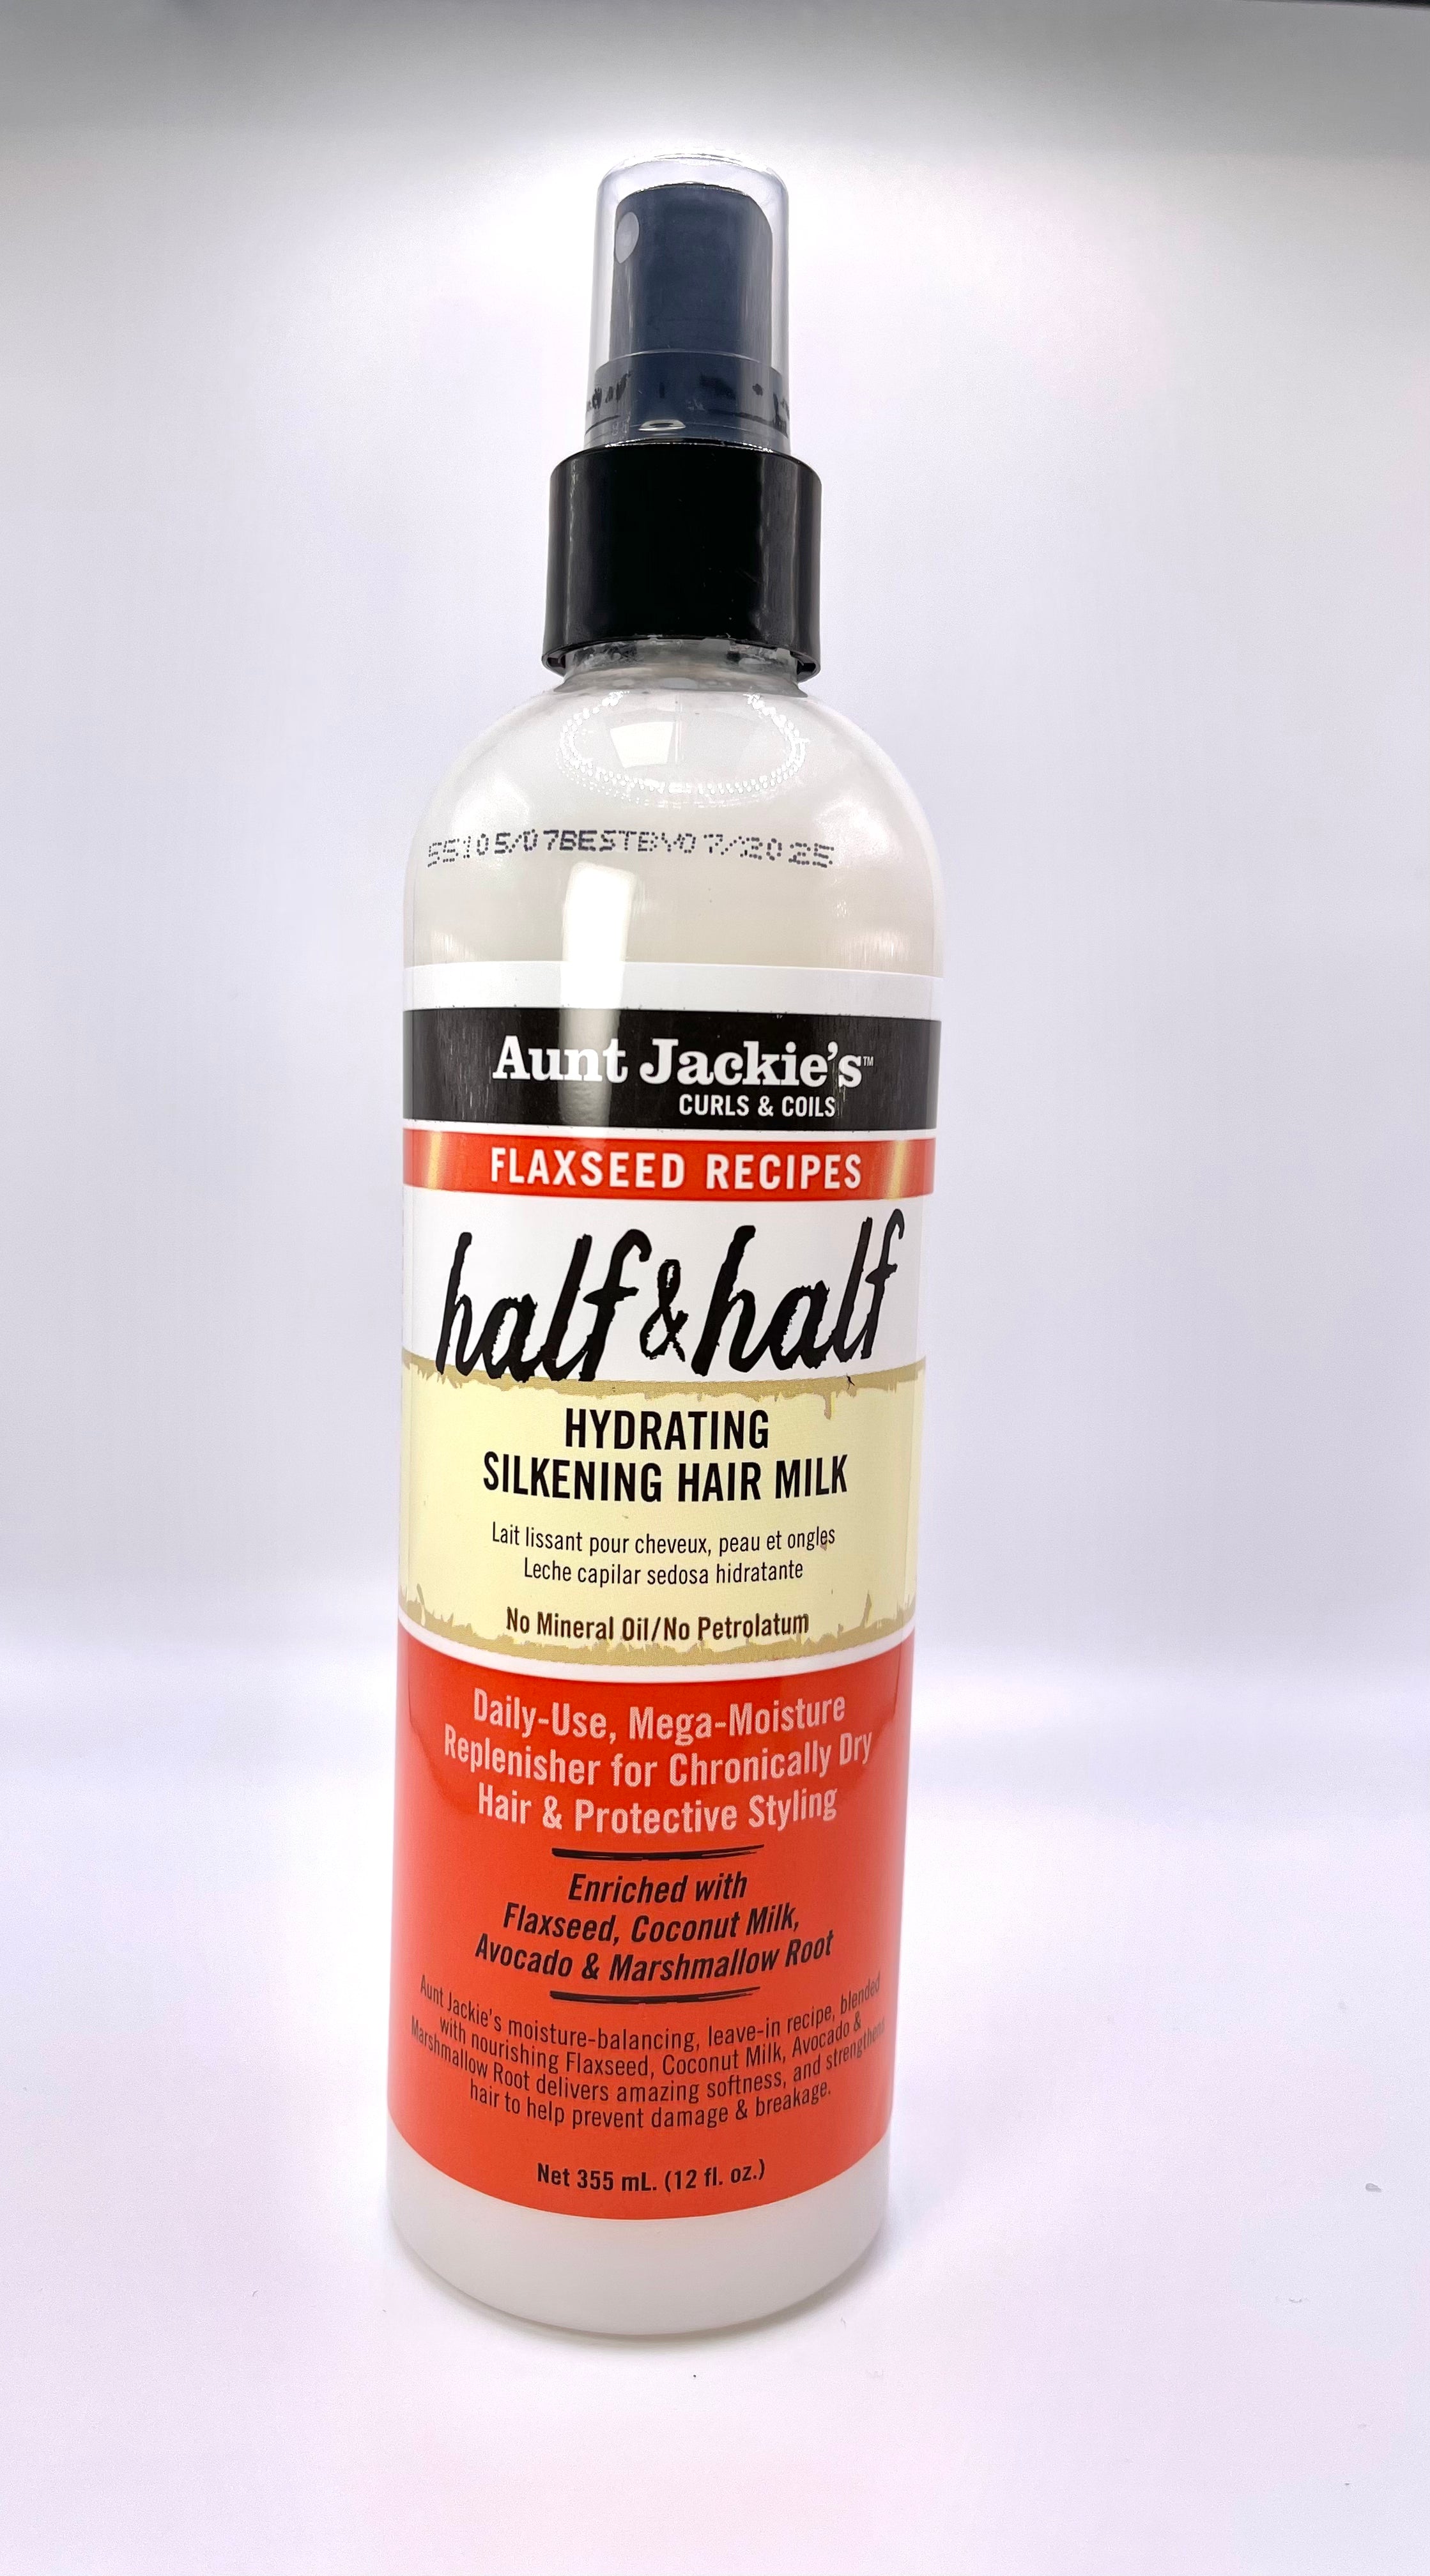 Aunt Jackie’s Half & Half Hydrating Silkening Hair Milk